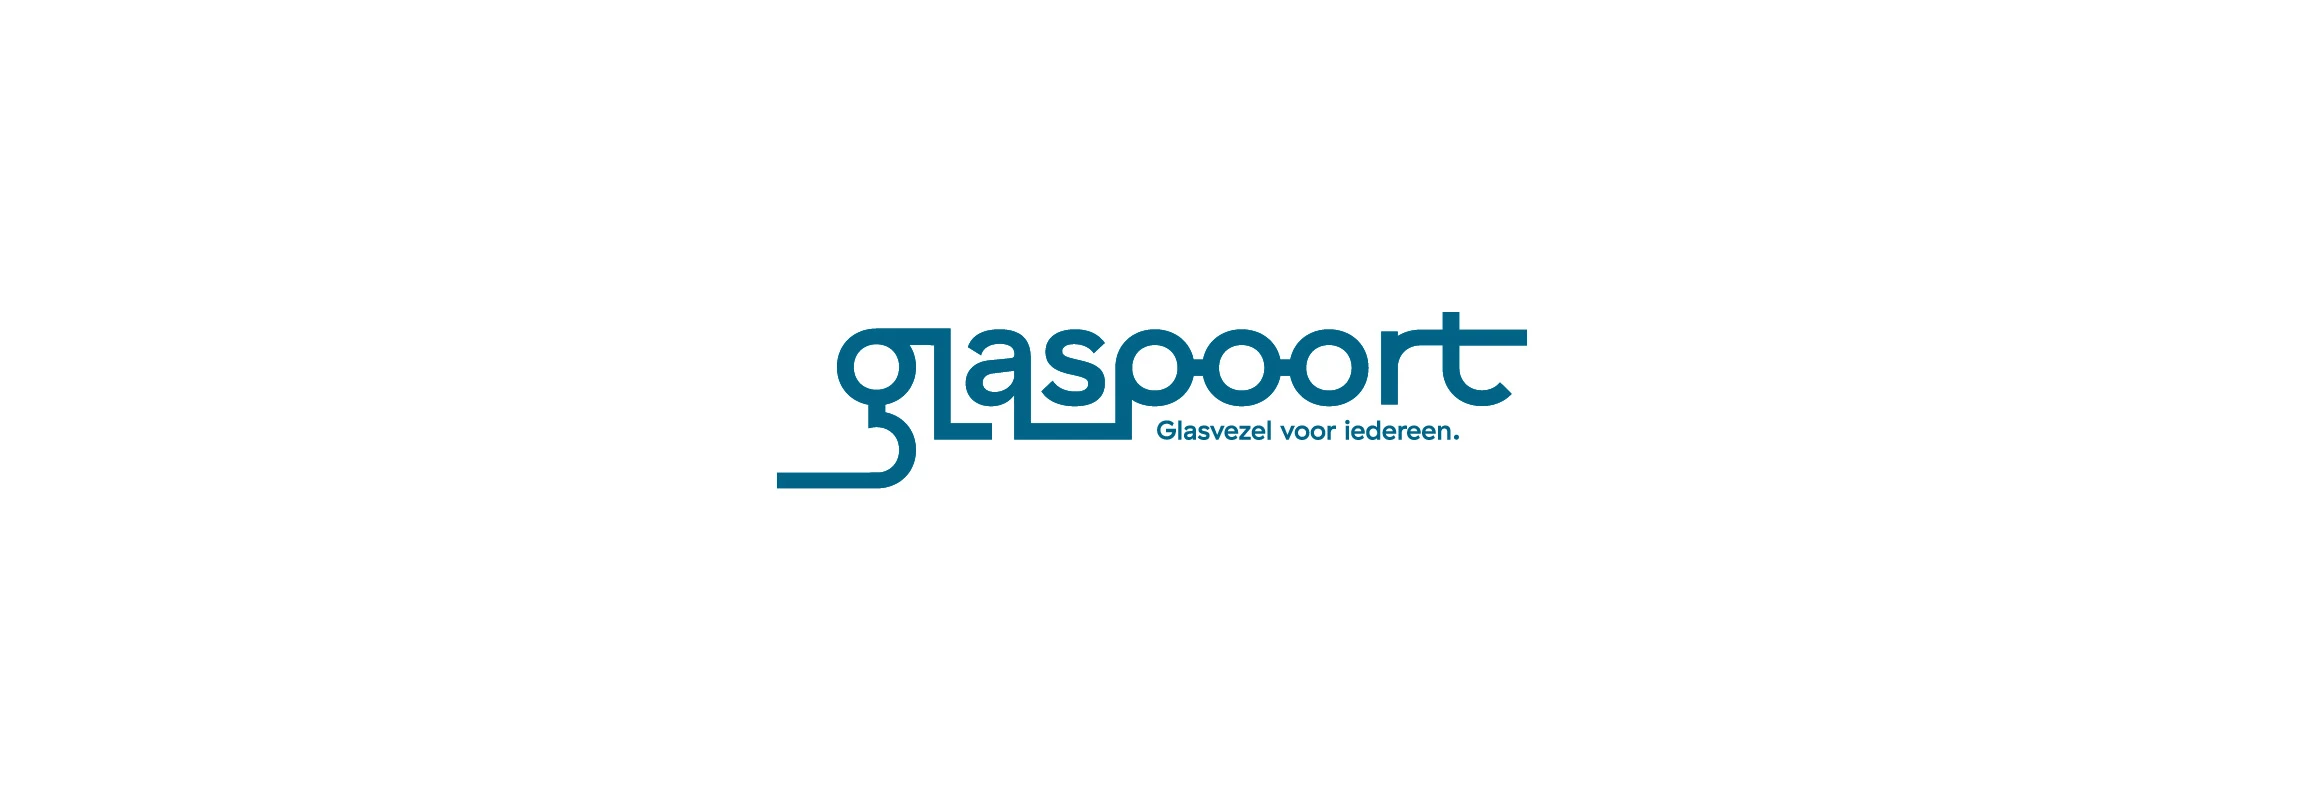 Glaspoort logo